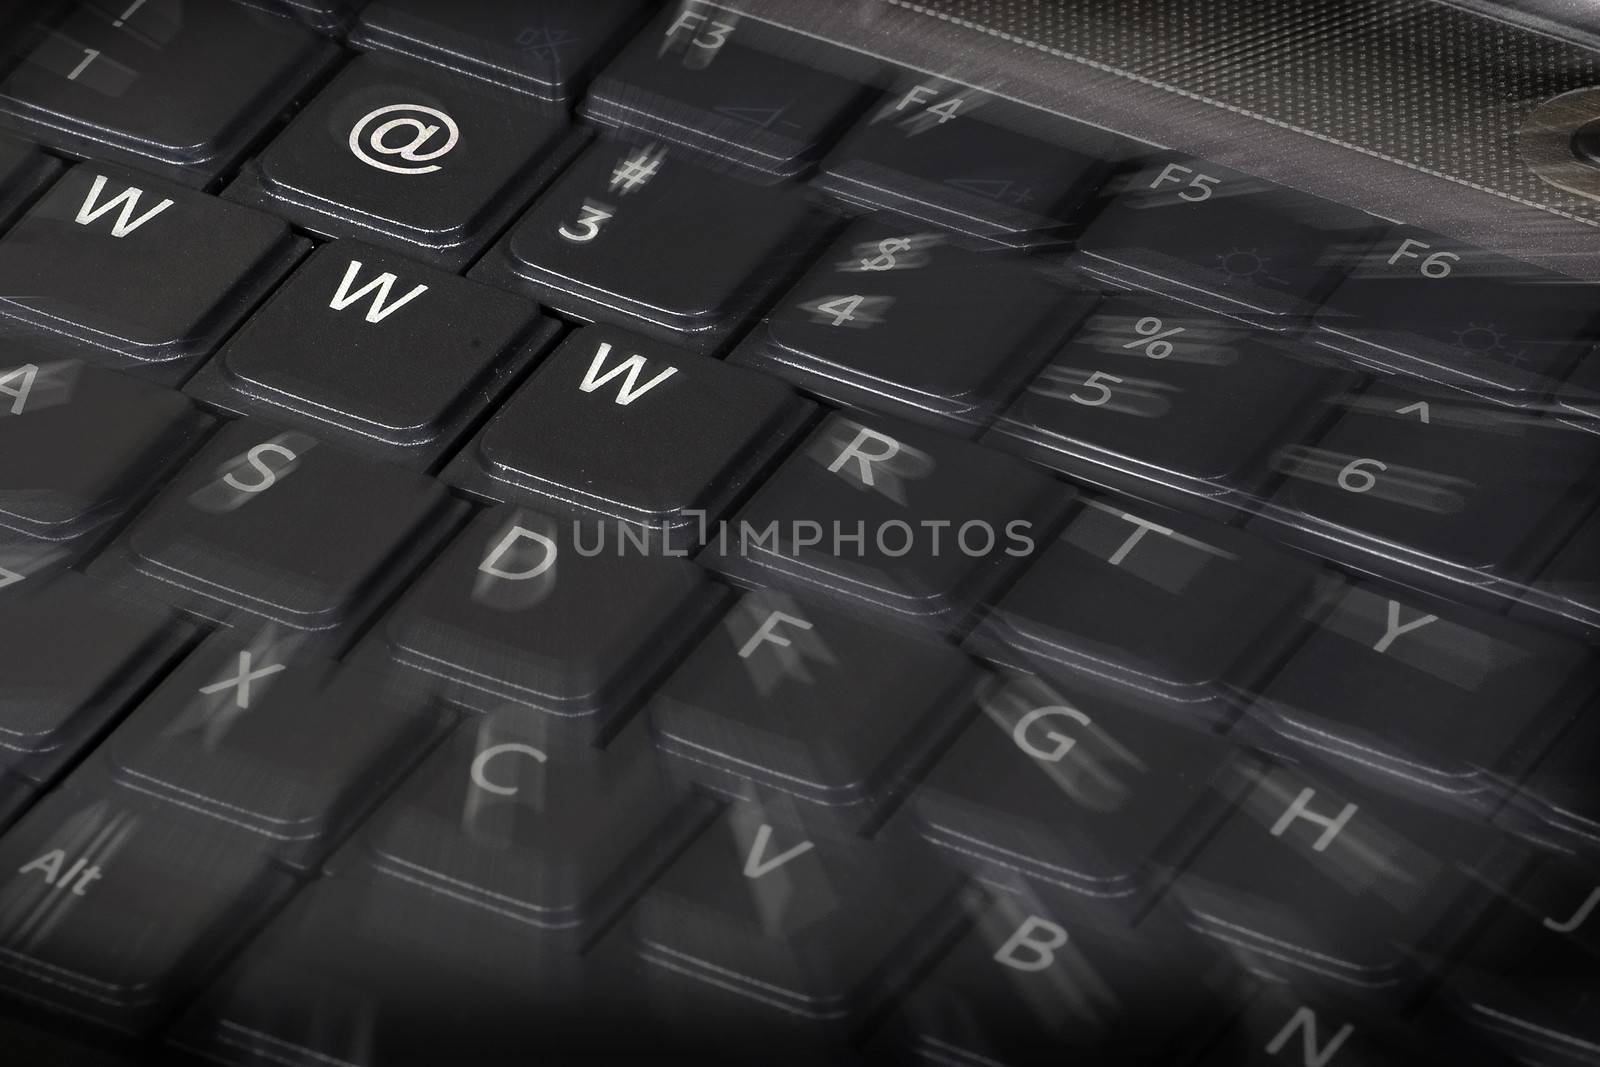 Web keyboard by dynamicfoto